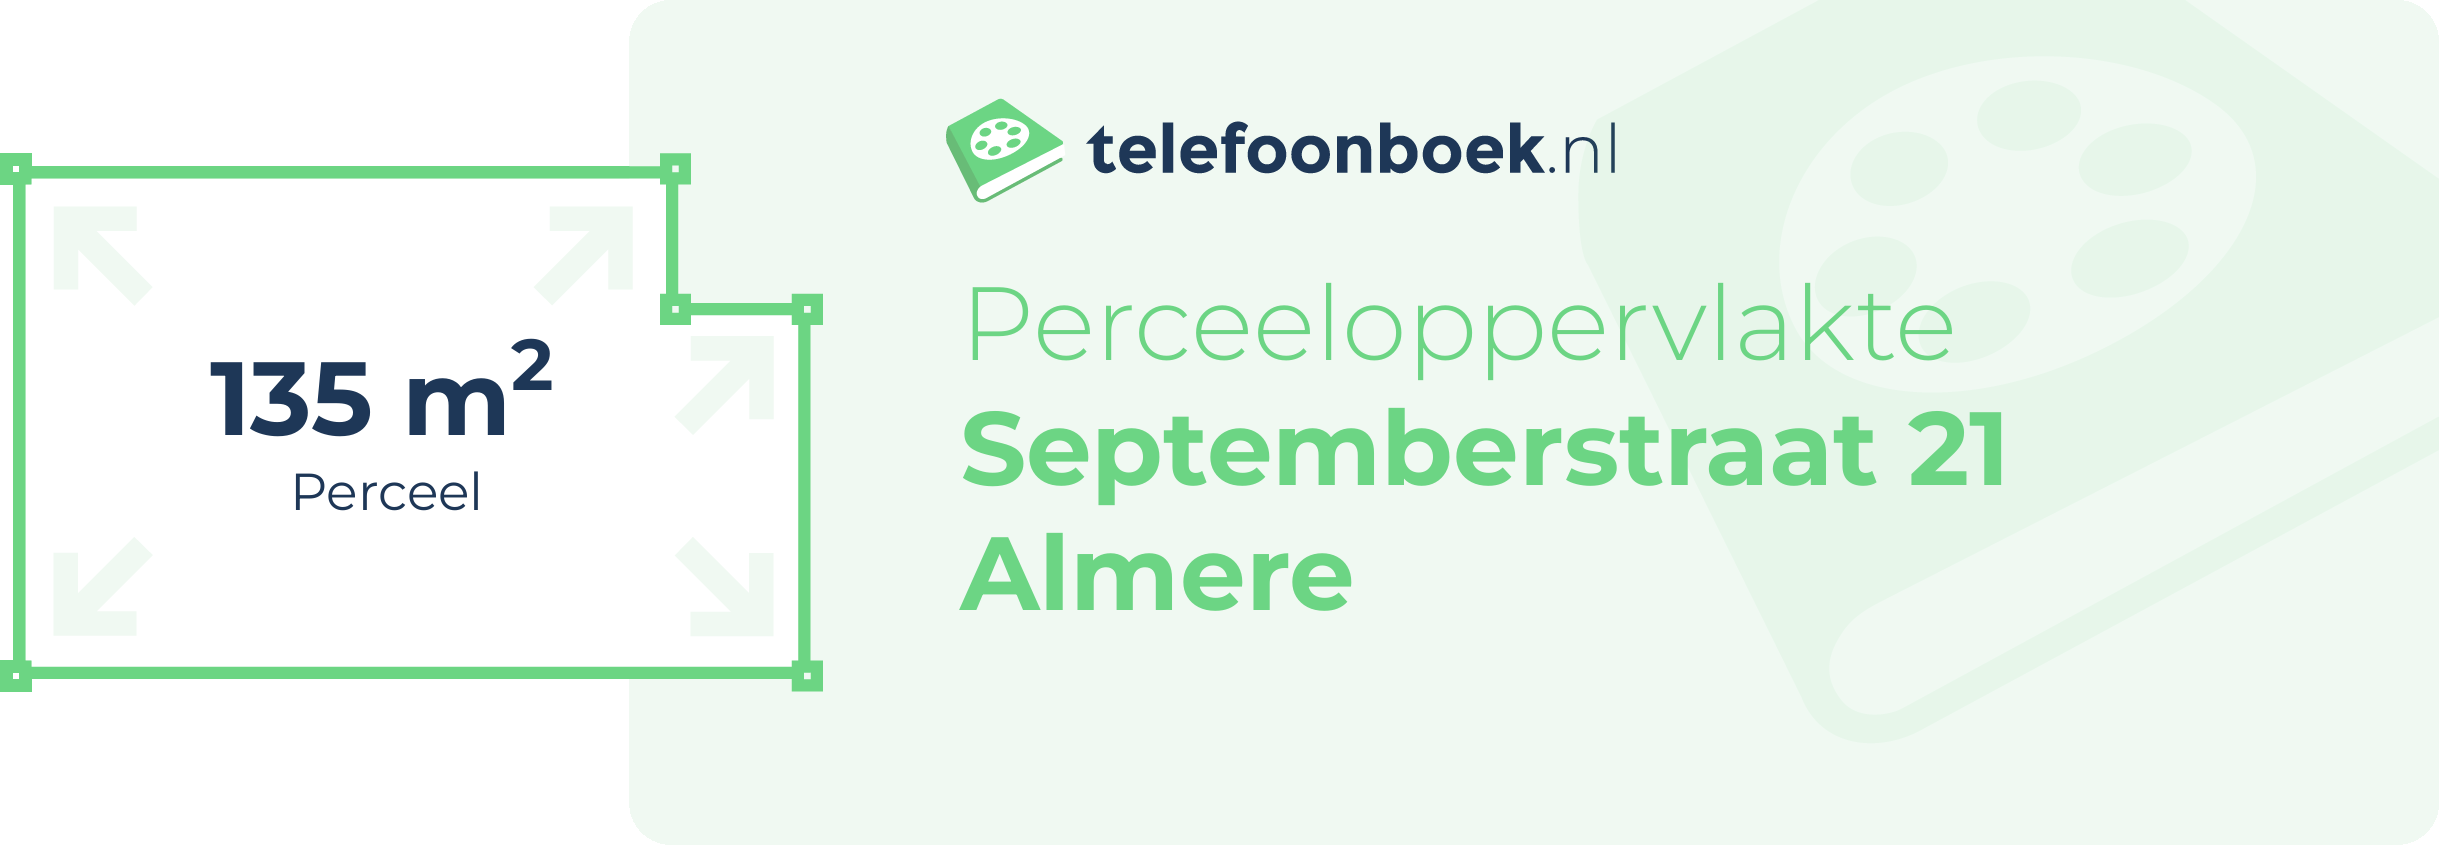 Perceeloppervlakte Septemberstraat 21 Almere